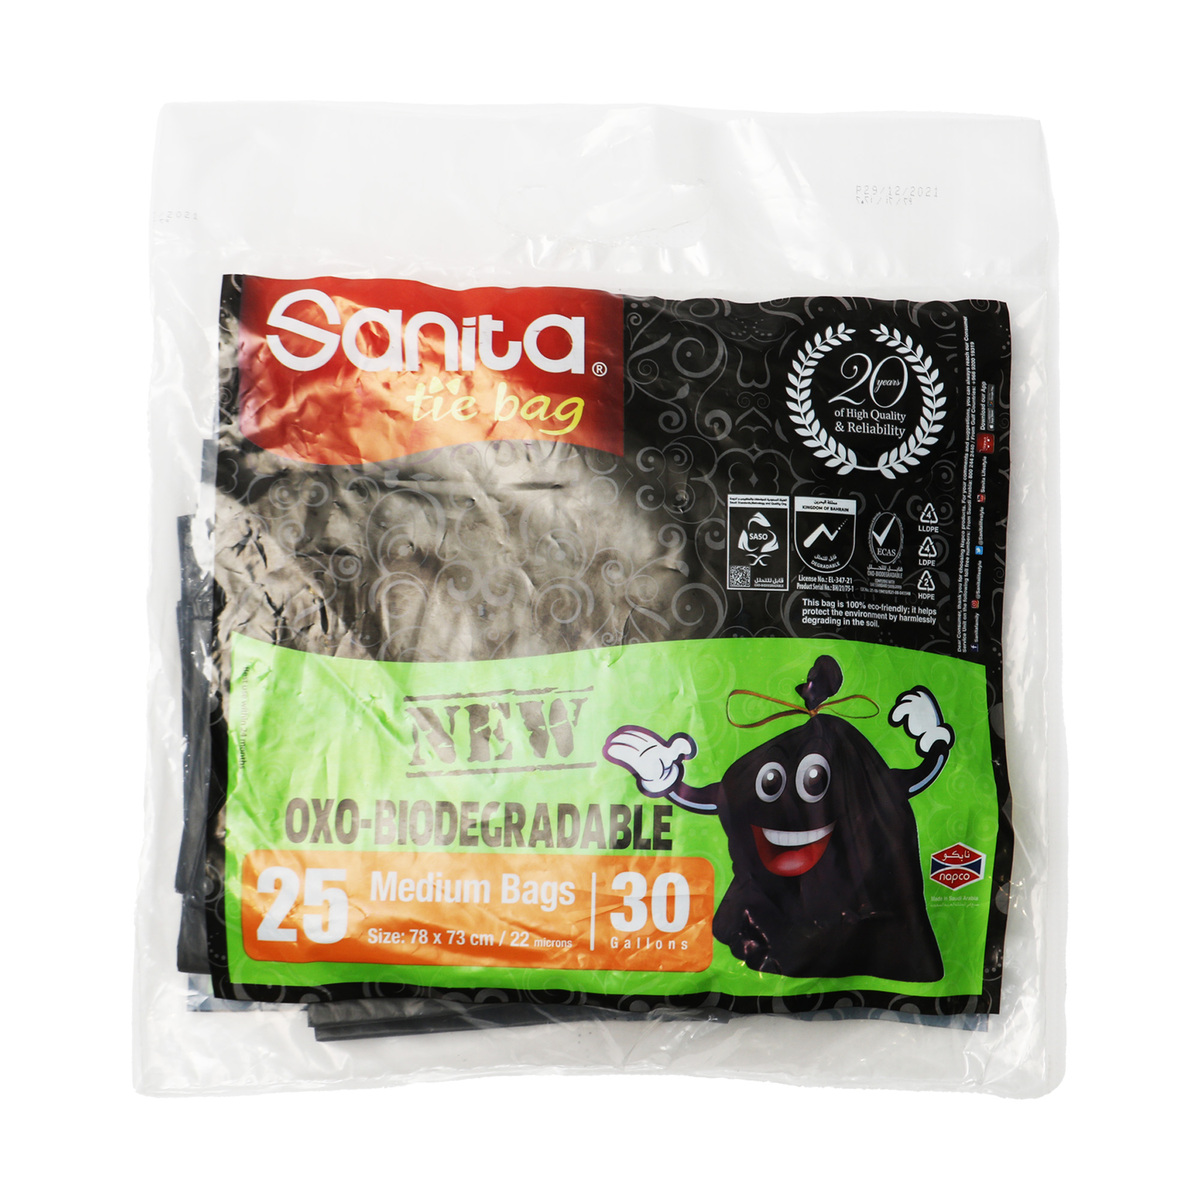 Sanita Tie Bag Biodegradable 30 Gallons 25pcs